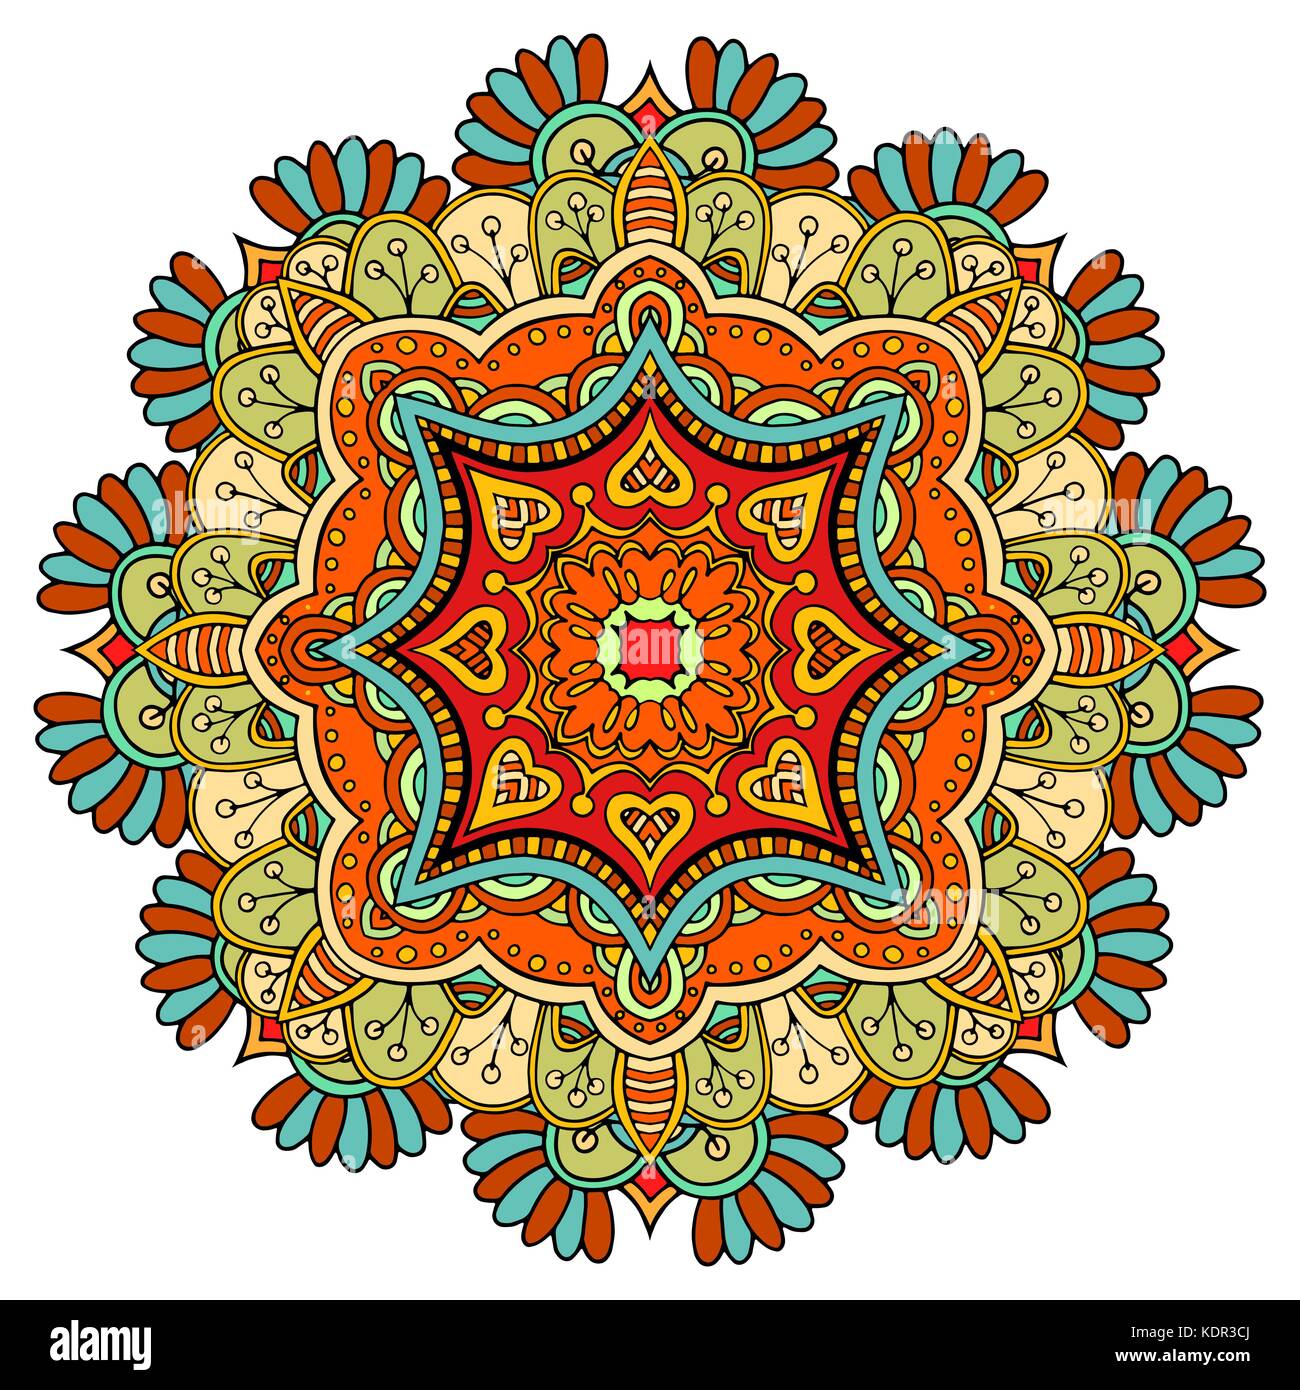 Image result for indian motifs"